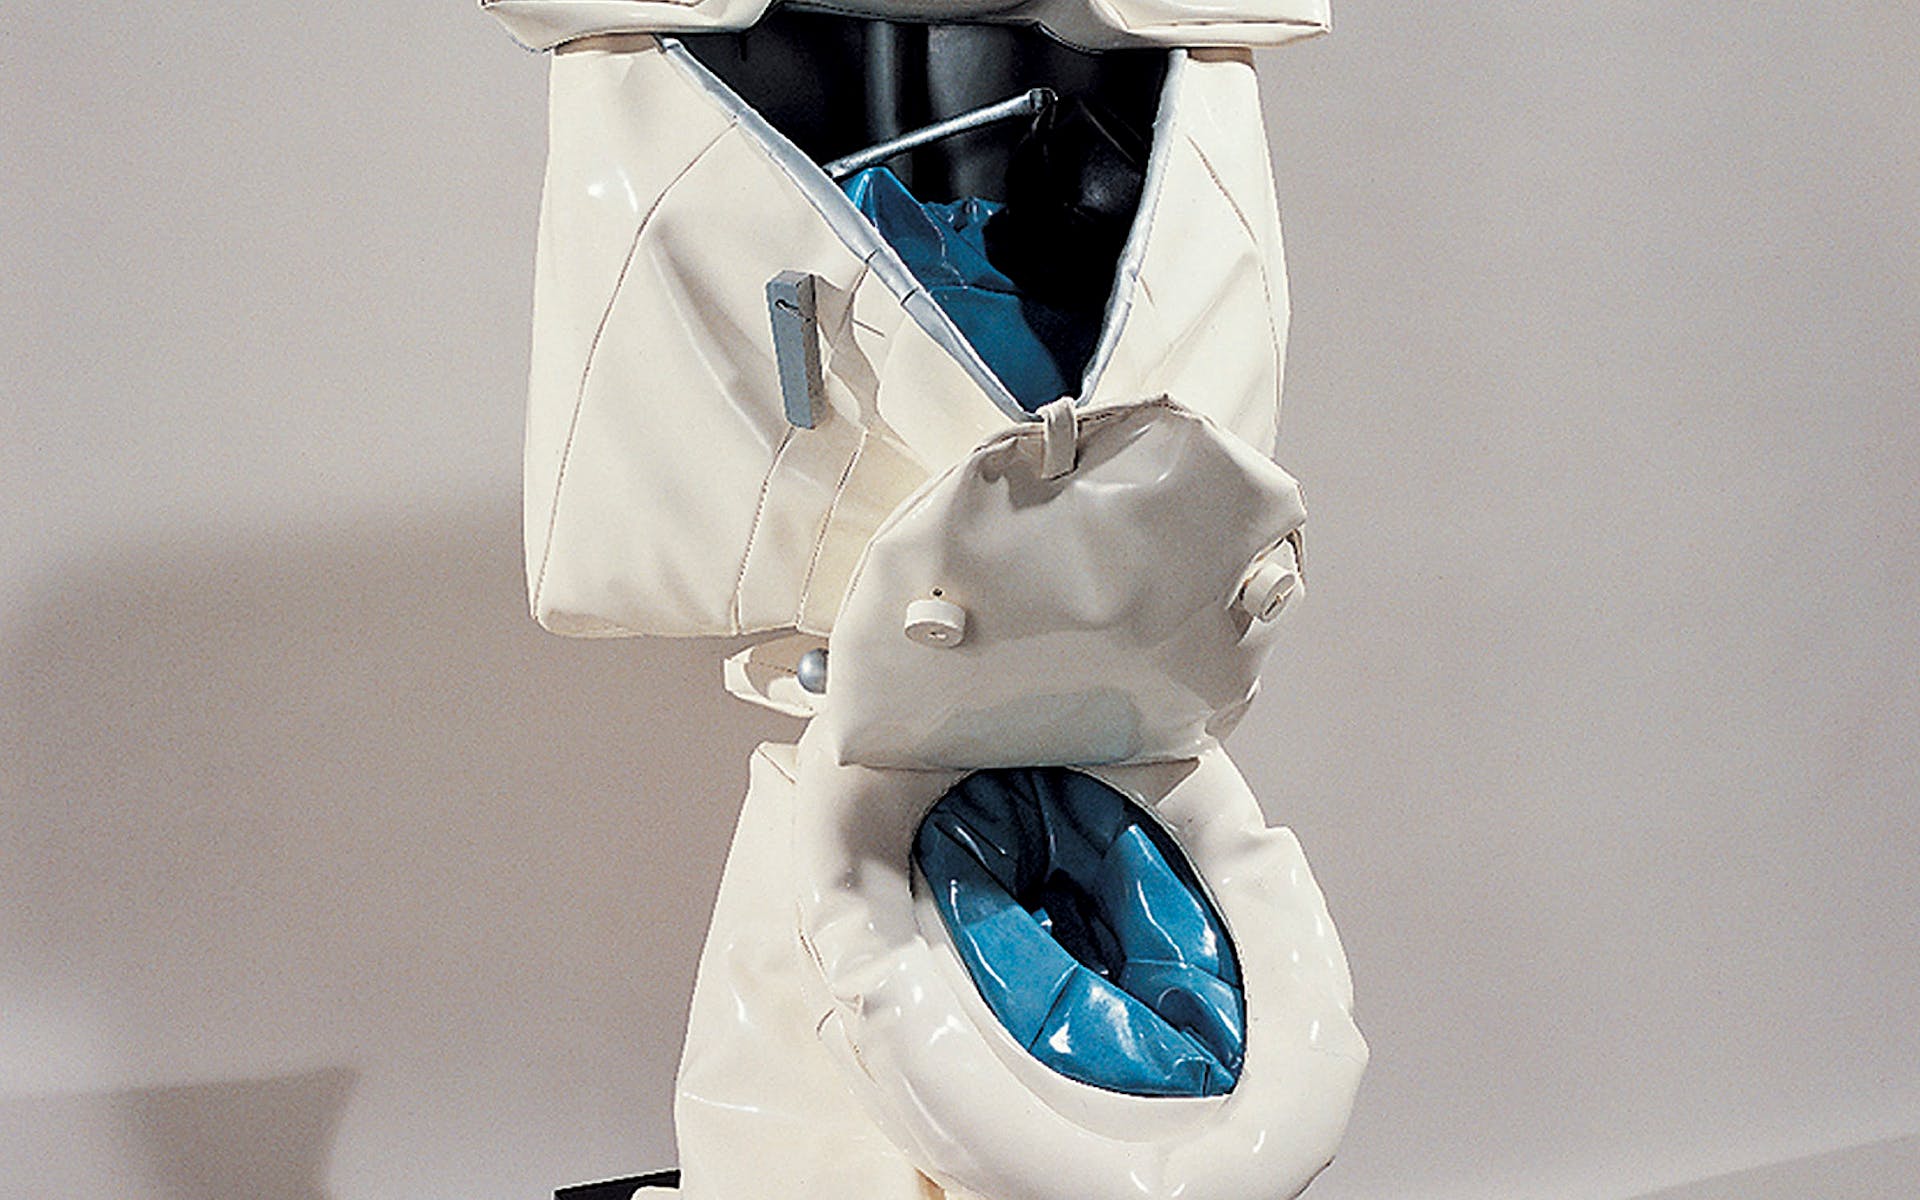 Claes Oldenburg, Soft Toilet, 1966